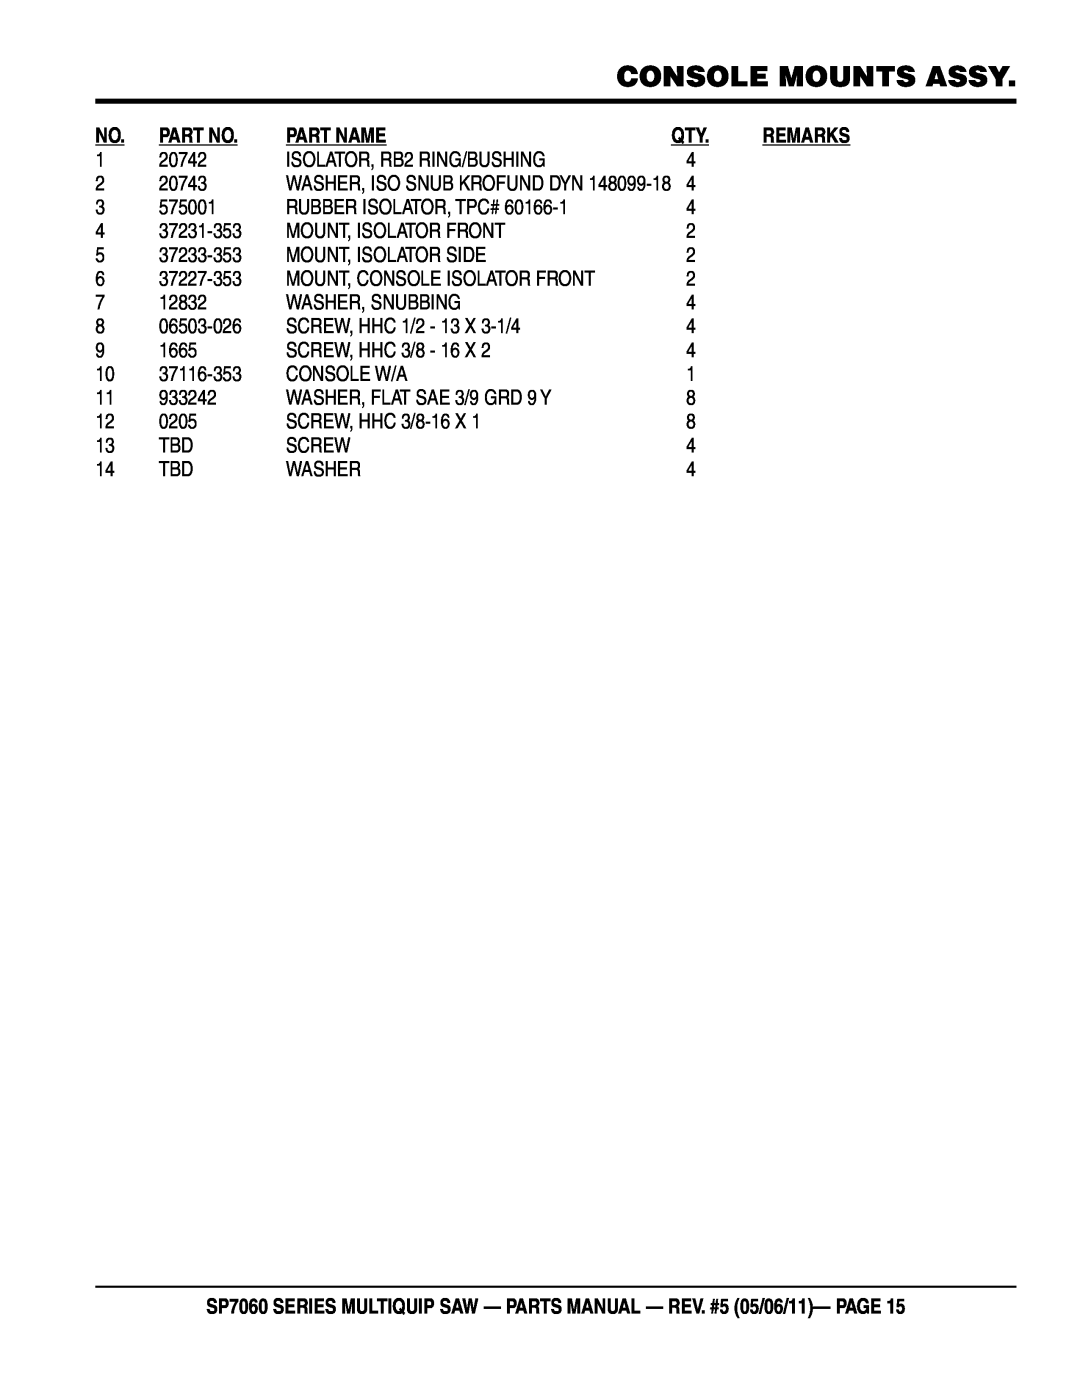 Multiquip SP706020 Console Mounts Assy, Part Name, SP7060 SERIES MULTIQUIP SAW - PARTS MANUAL - REV. #5 05/06/11- PAGE 